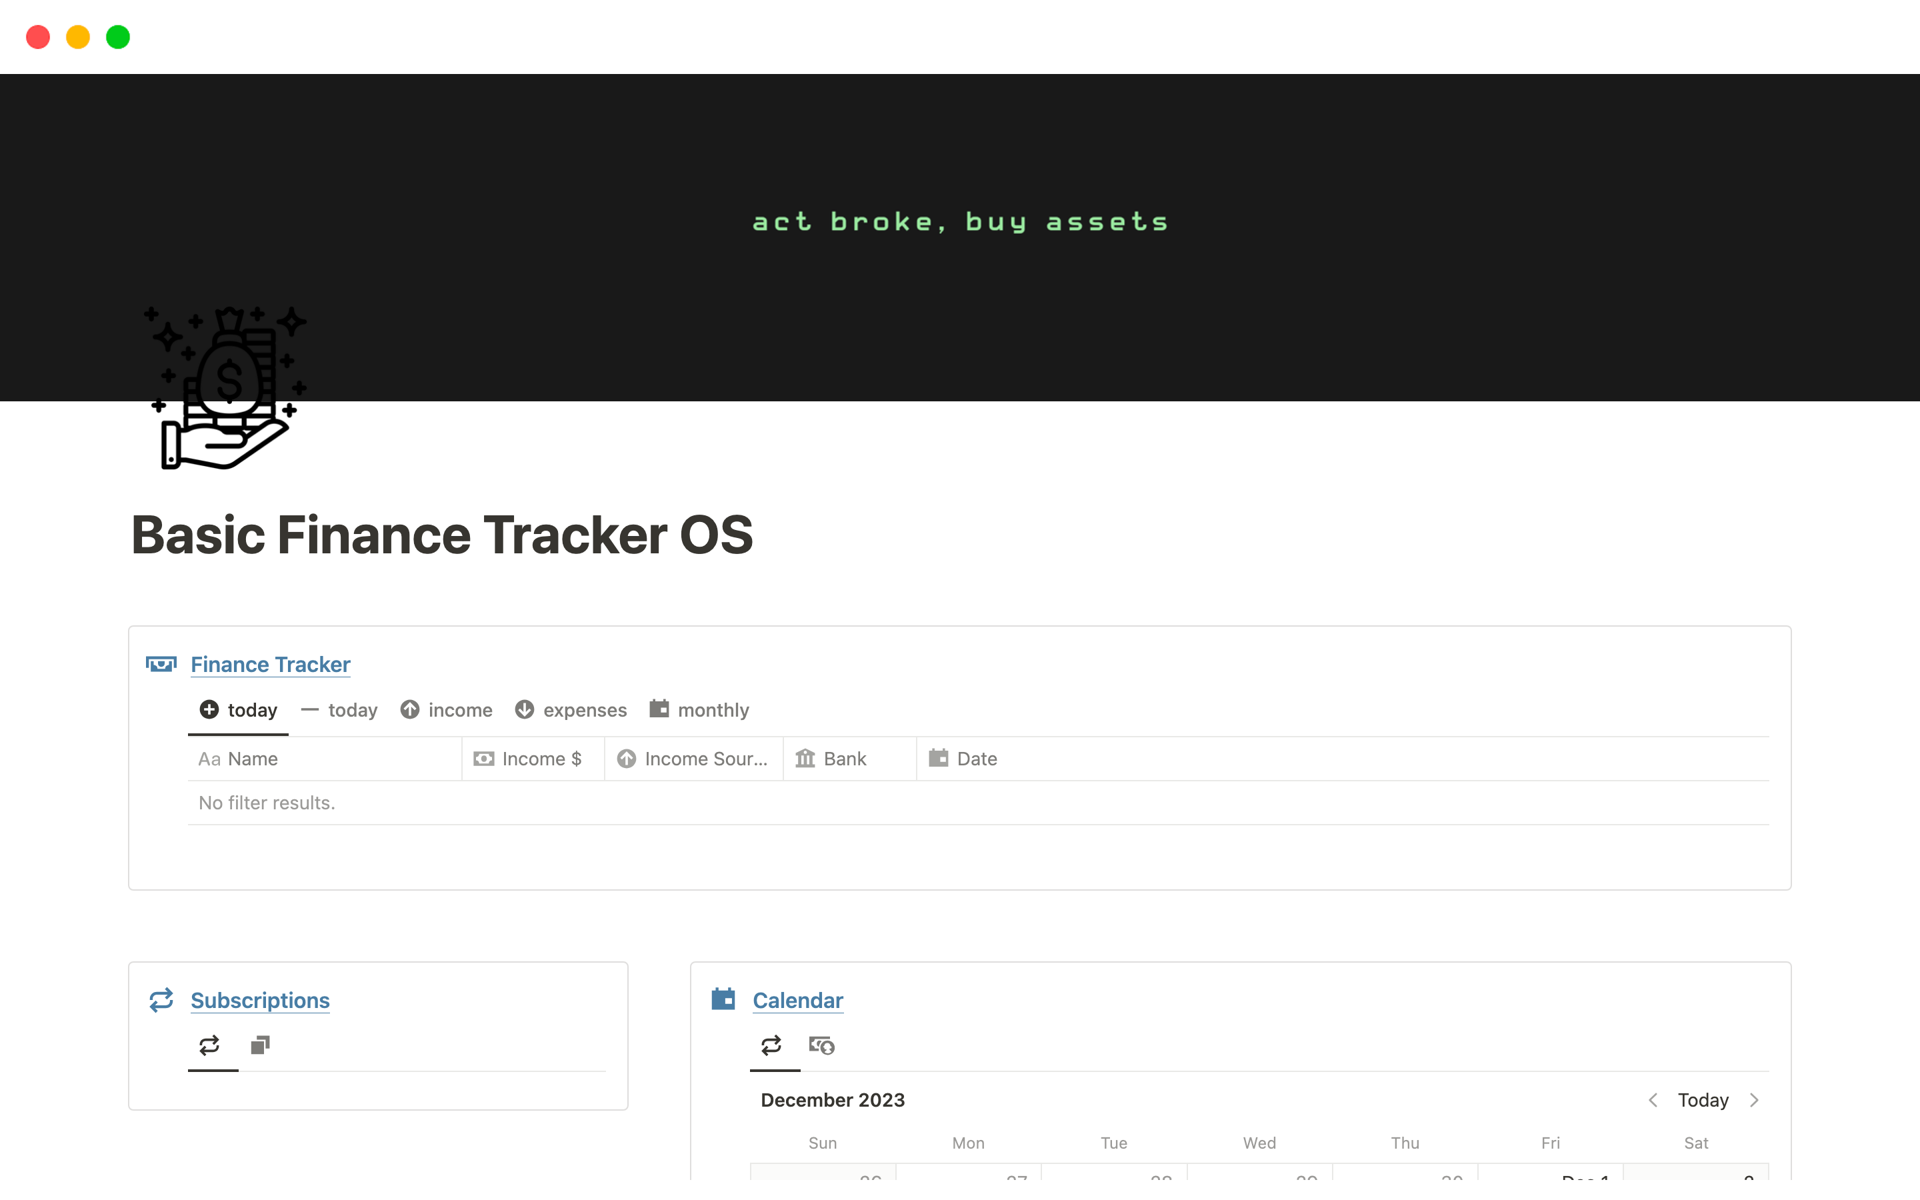 Basic Finance Tracker OS